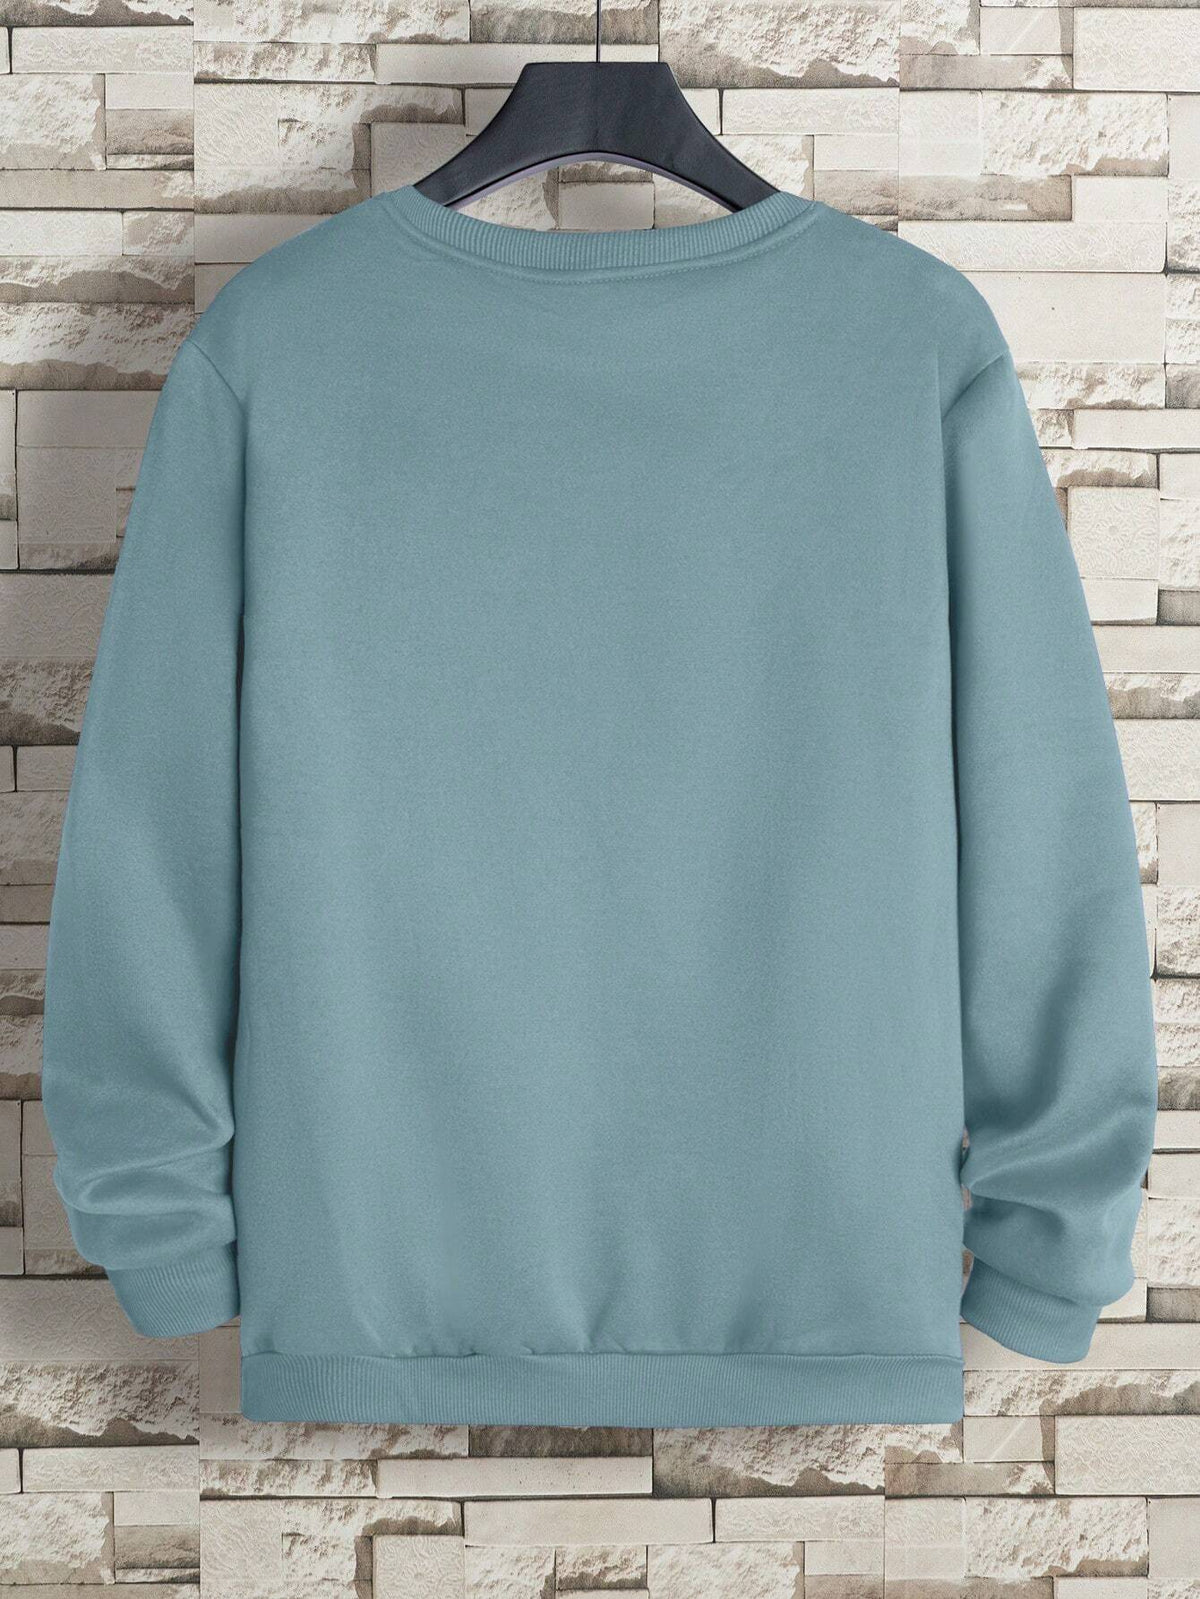 Thermal Lined Sweatshirt